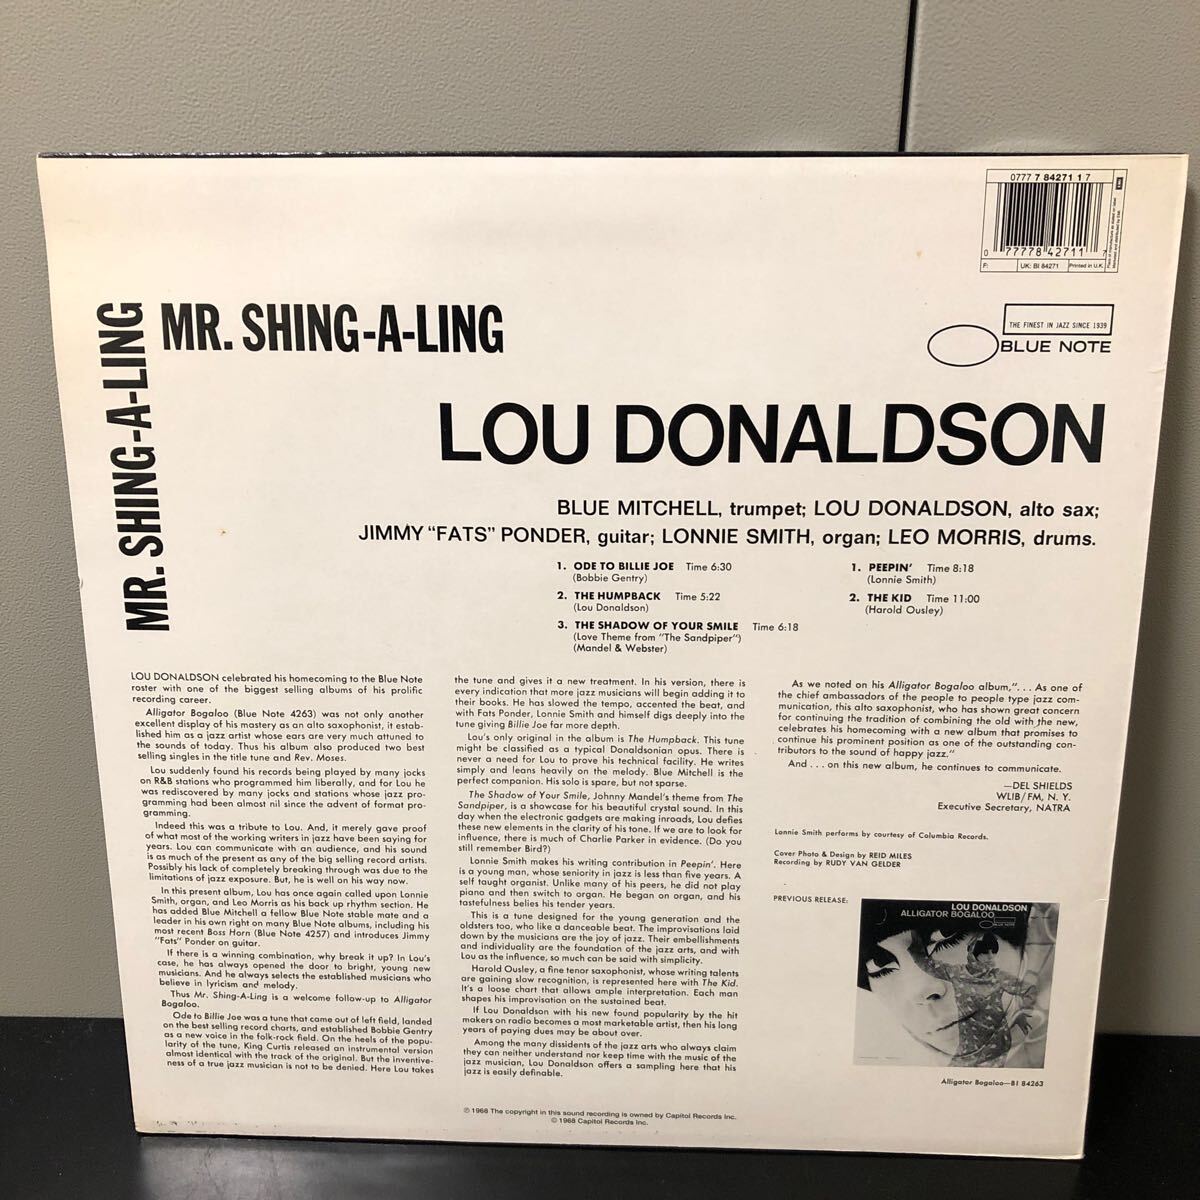 SNR240517 BLUE NOTE ルー・ドナルドソン LP レコード LOU DONALDSON MR.SHING-A-LING 刻印あり 0777 7 84271 1 7 ジャズ JAZZ_画像2